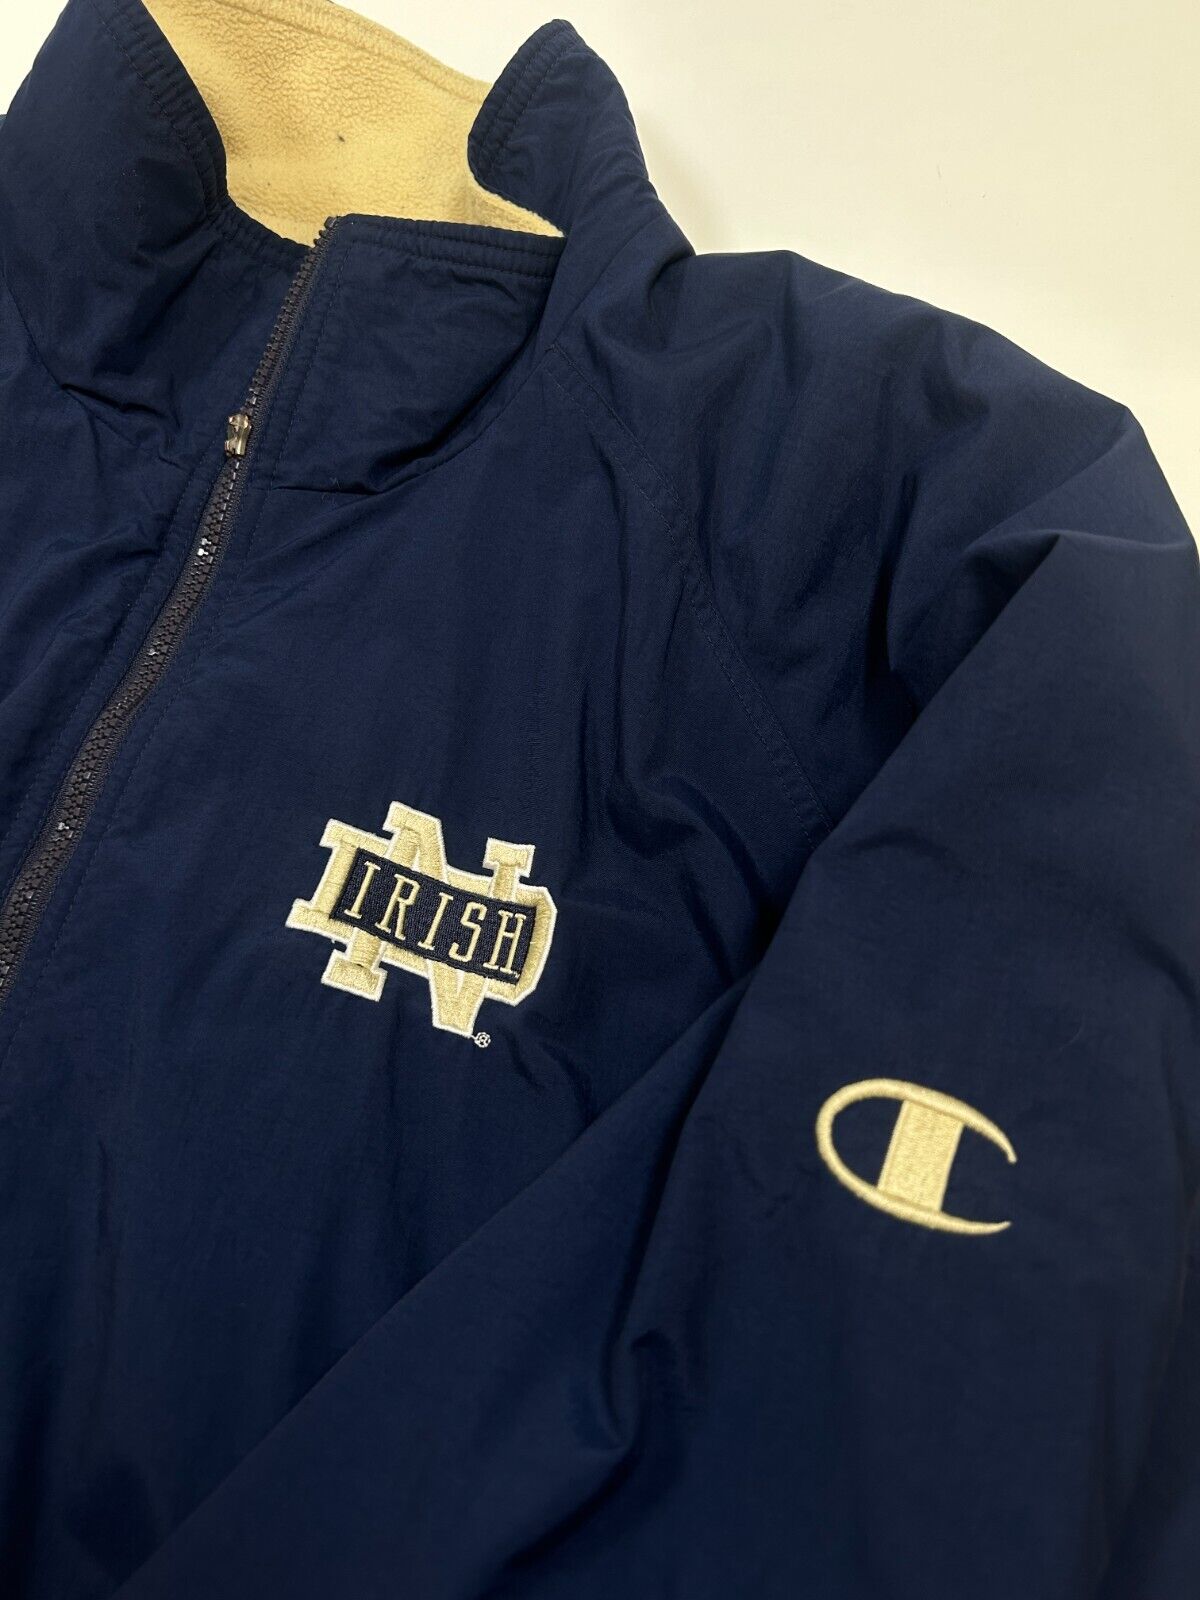 Vintage 90s Notre Dame Fighting Irish Champion Fleece Lined NCAA Jacket Size 2XL